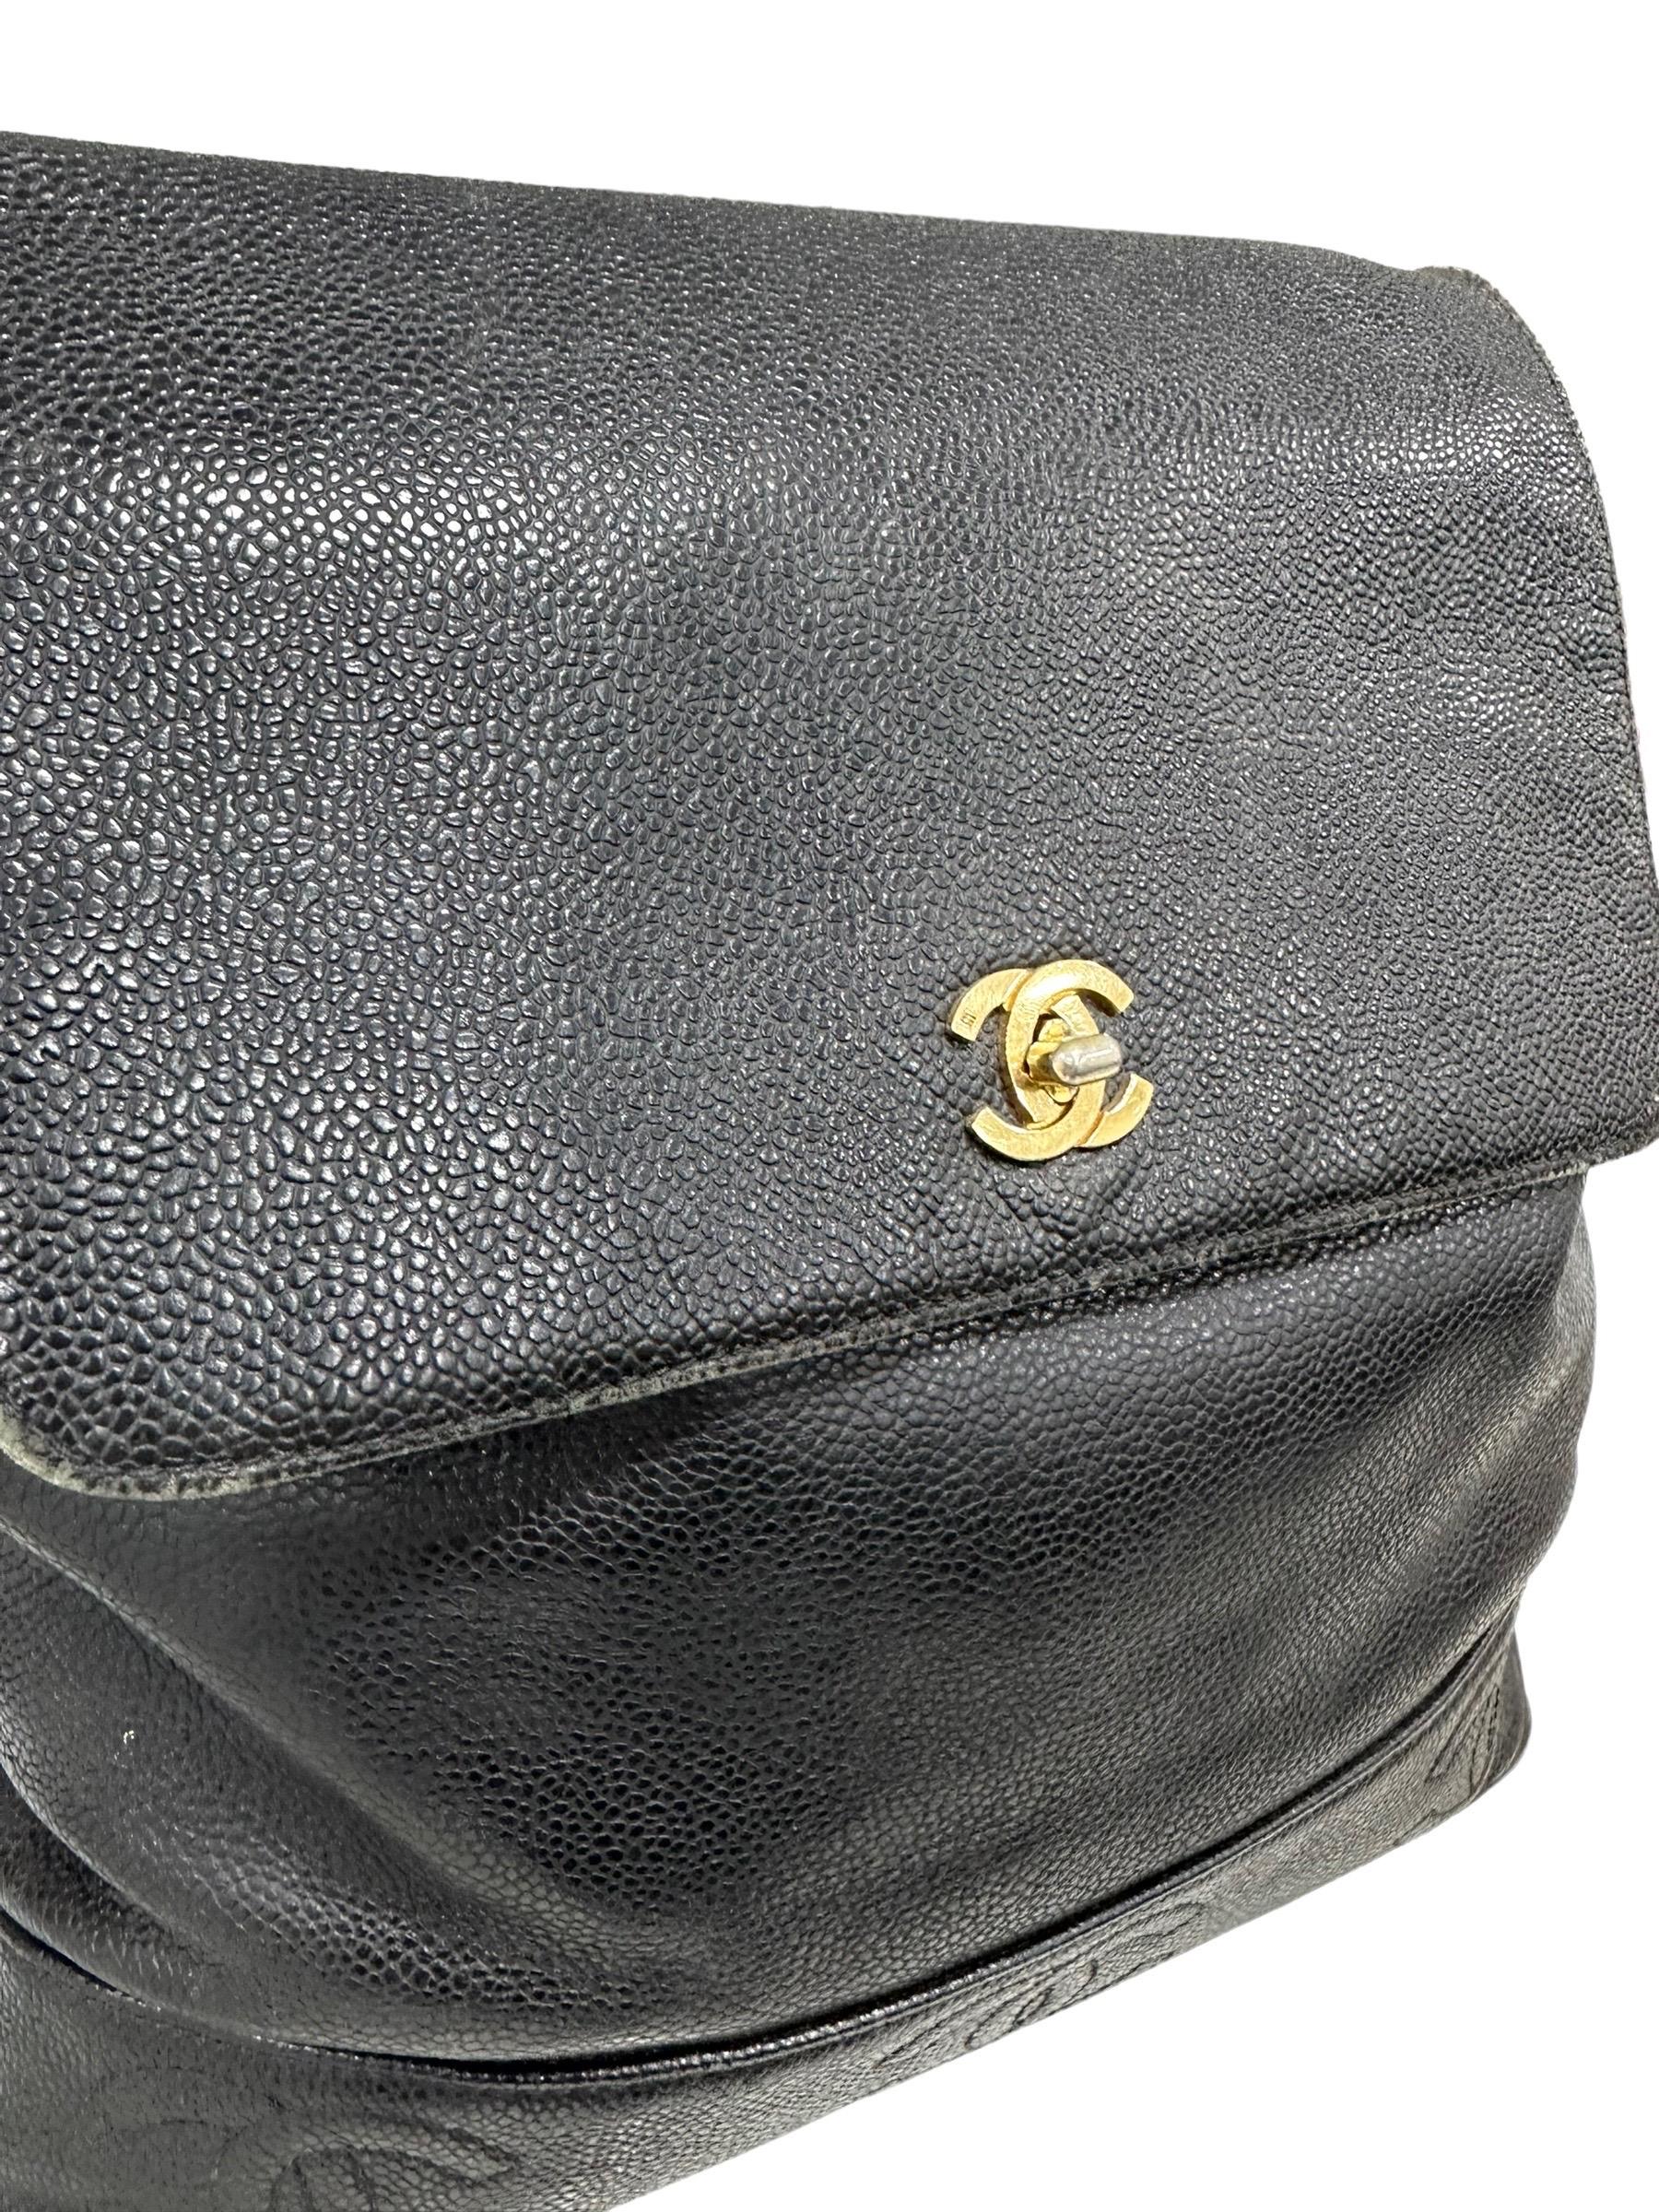 Women's 1997 Chanel Black Leather Vintage Backpack 